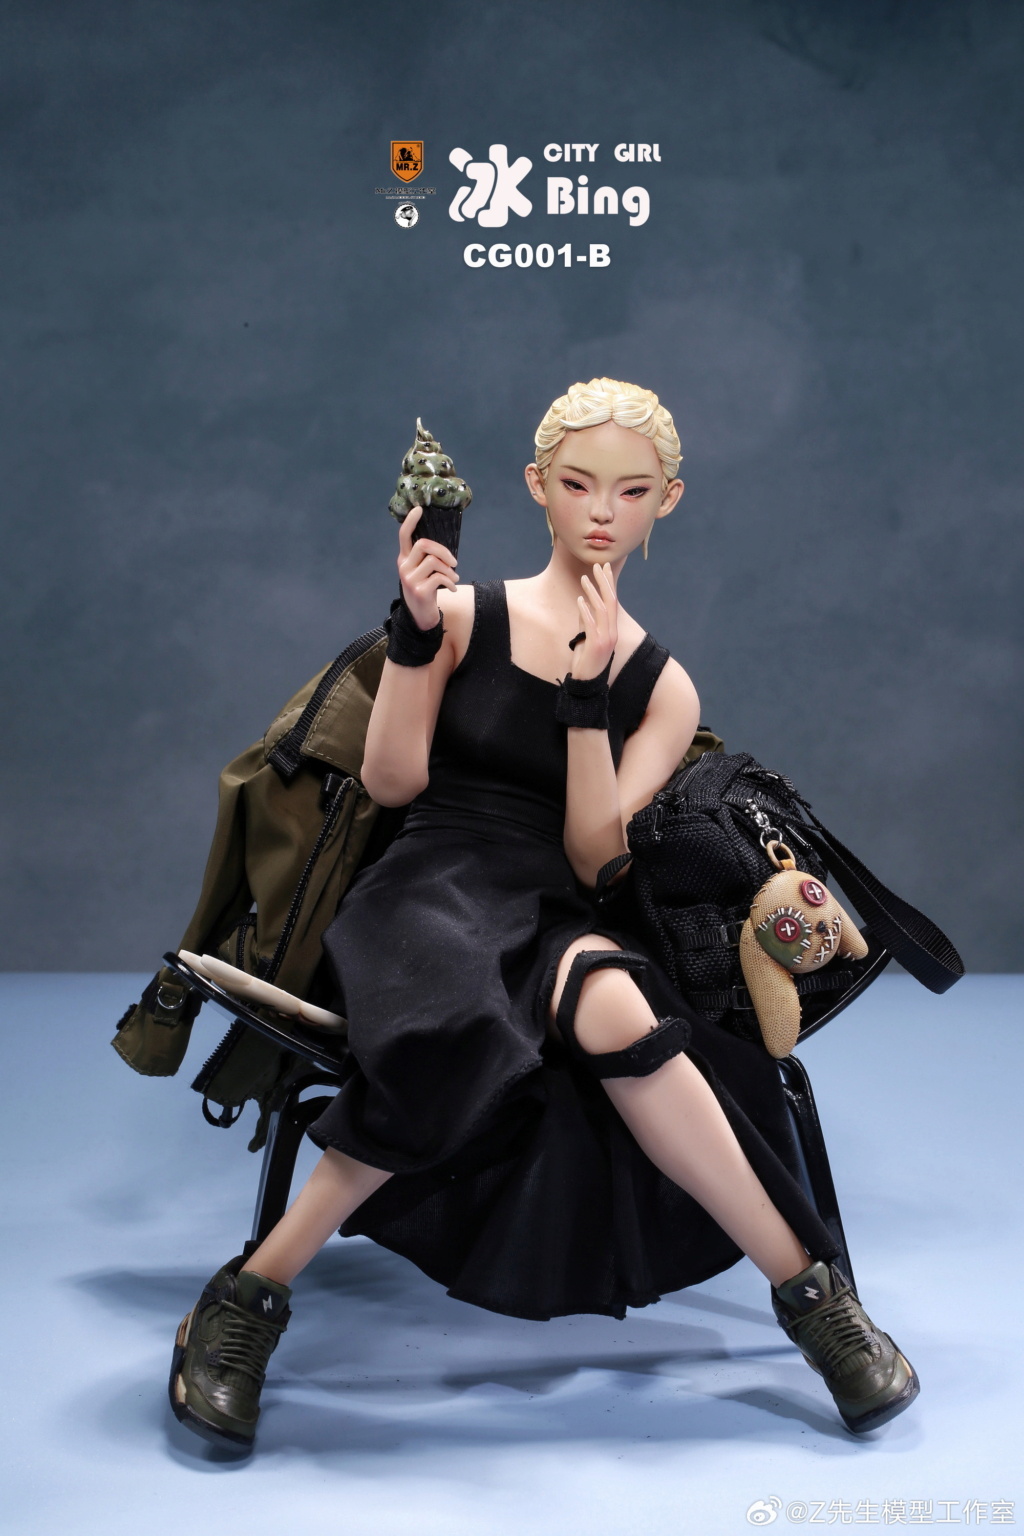 MrZ - NEW PRODUCT: Mr.Z model studio - city series first urban girl Mu & Bing #CG001-A/B 6b270b29